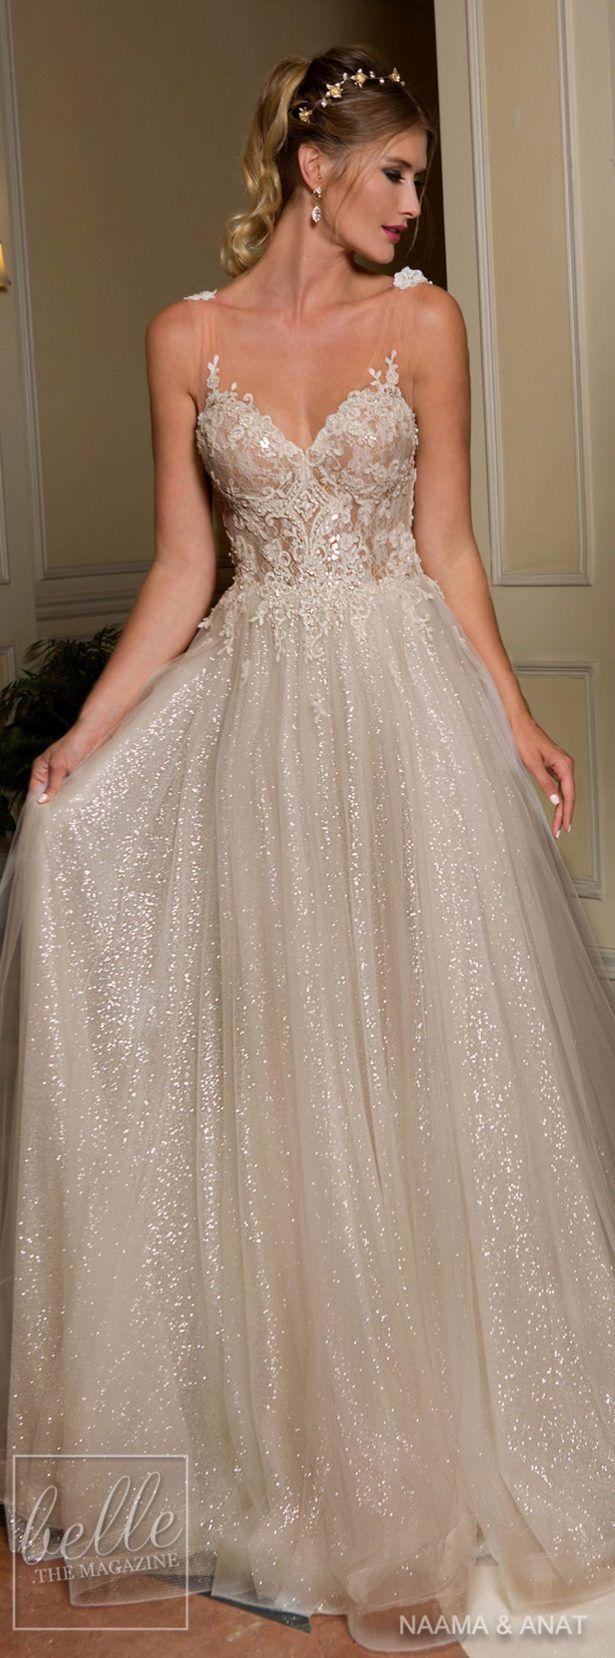 Wedding - Naama & Anat 2018 Wedding Dresses - "Starlight" Bridal Collection